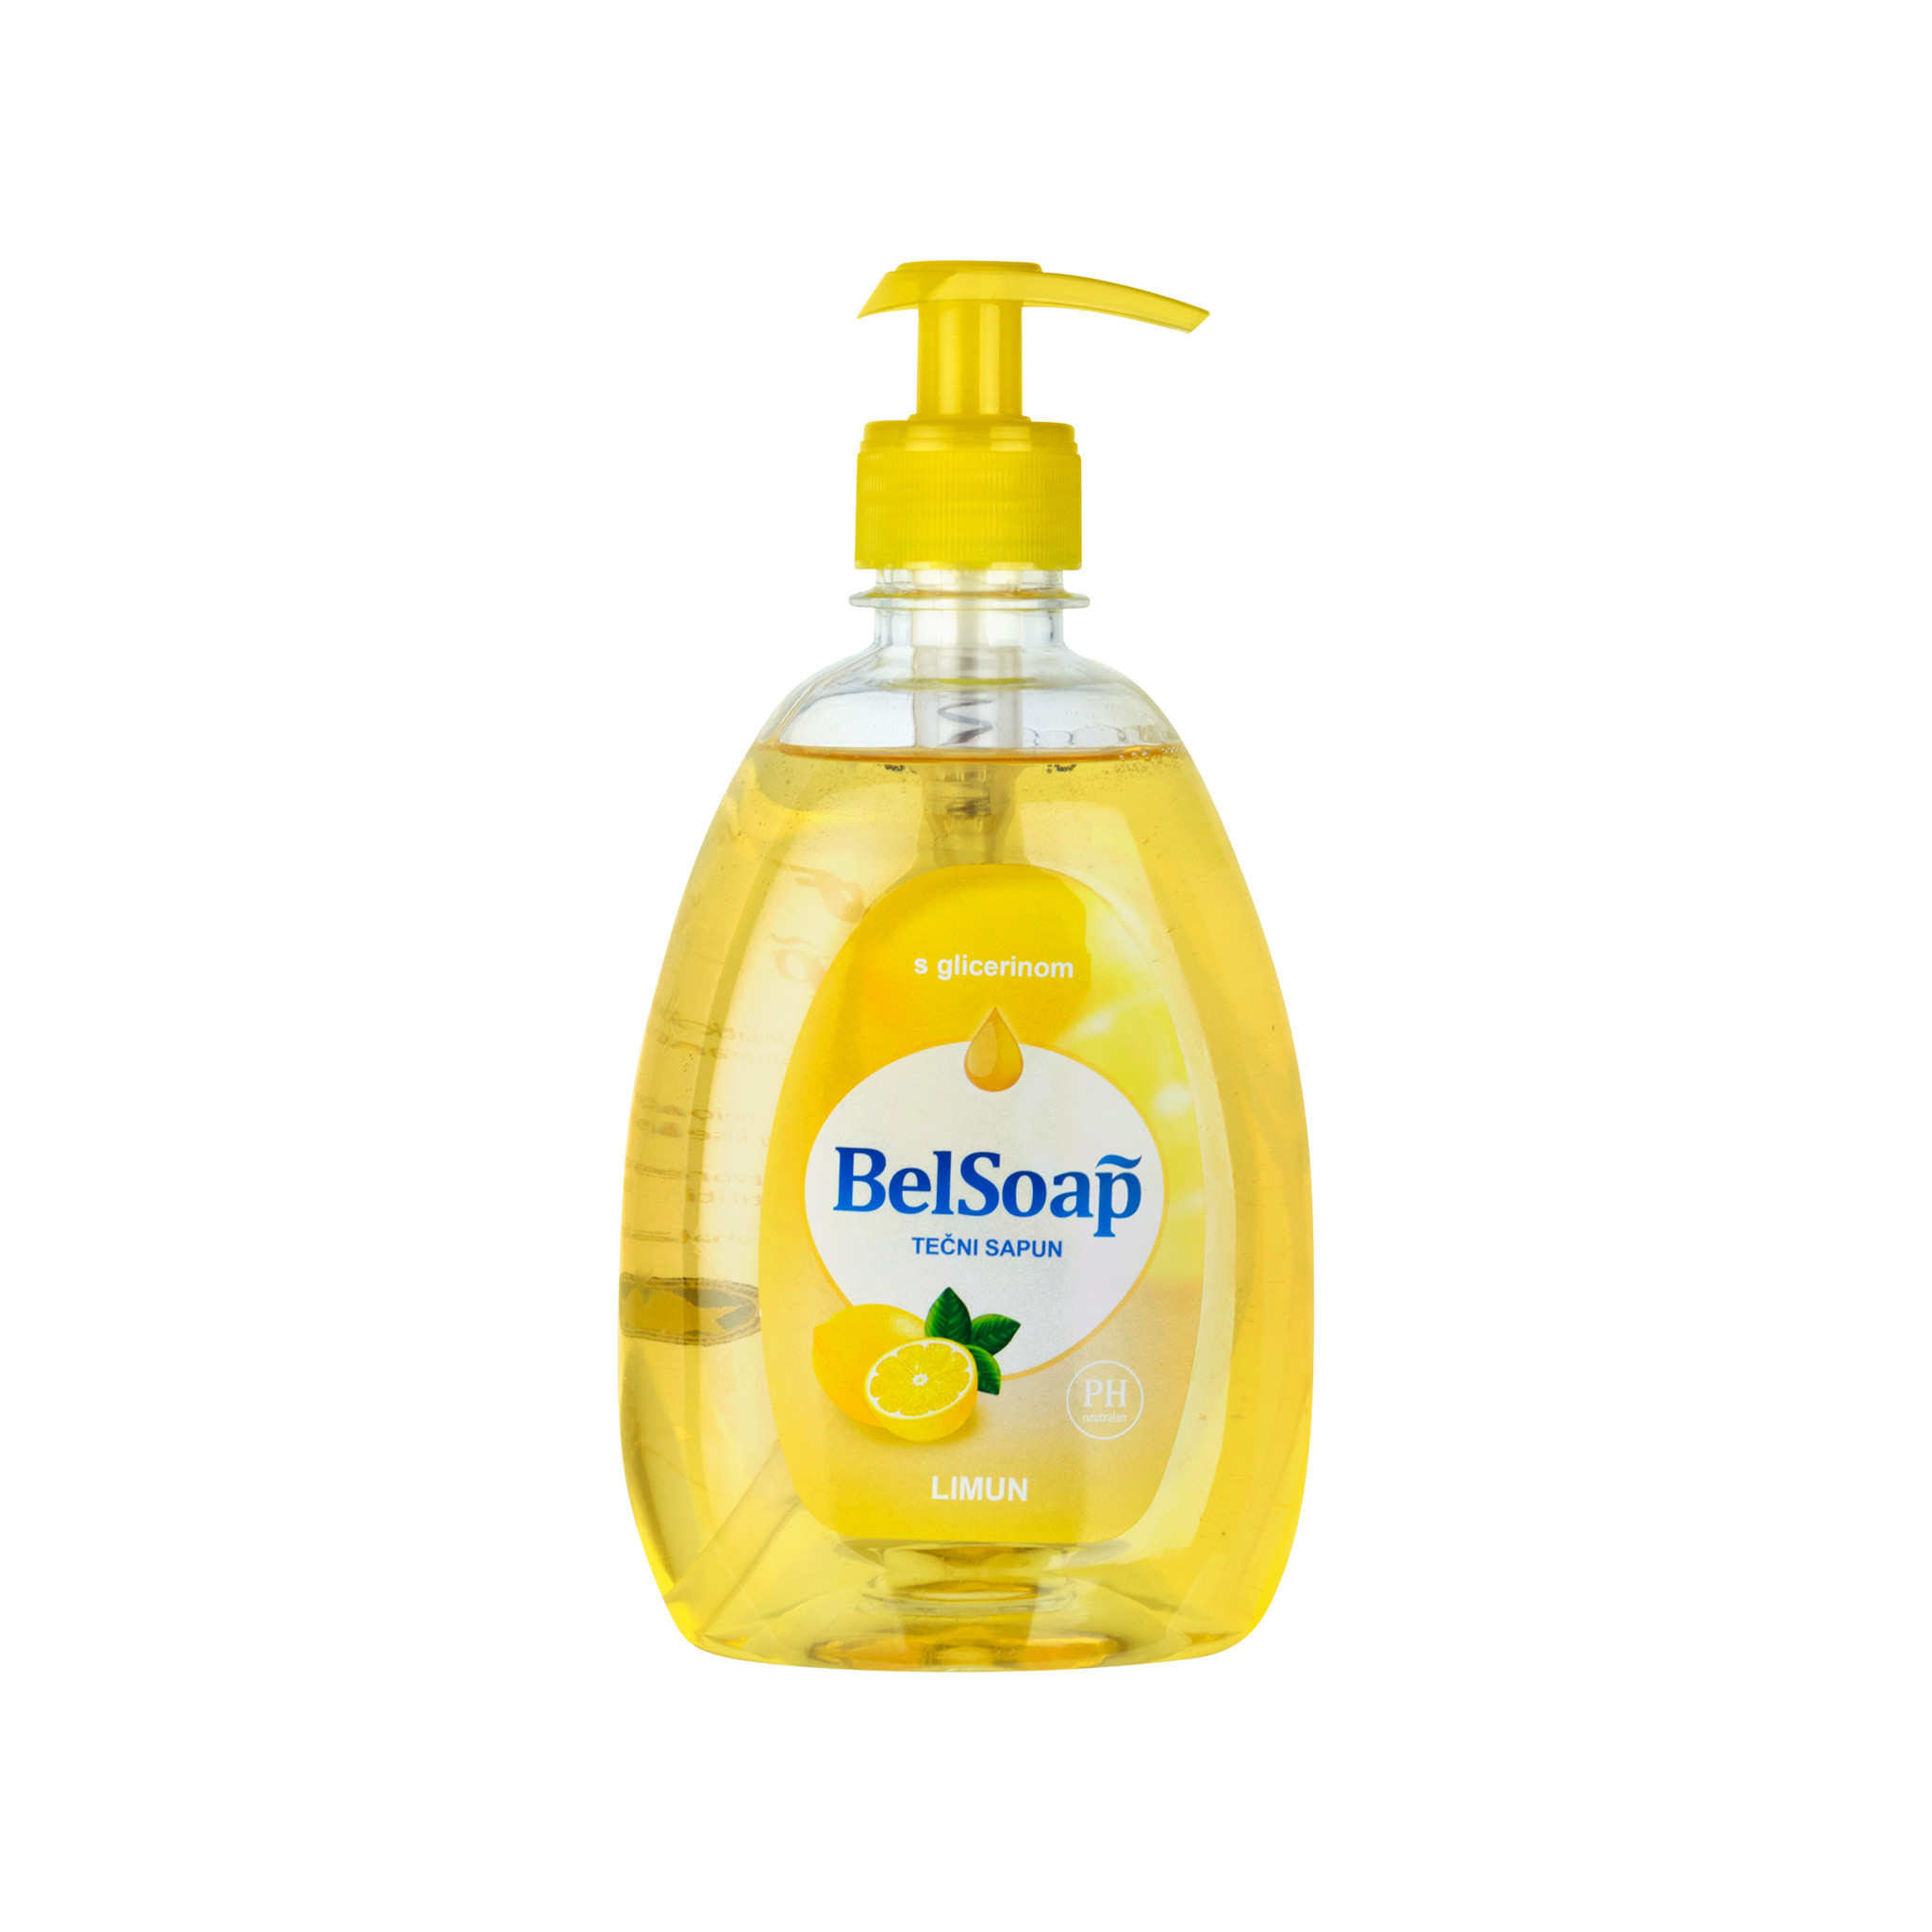 BelSoap tečni sapun limun SP 0,5L